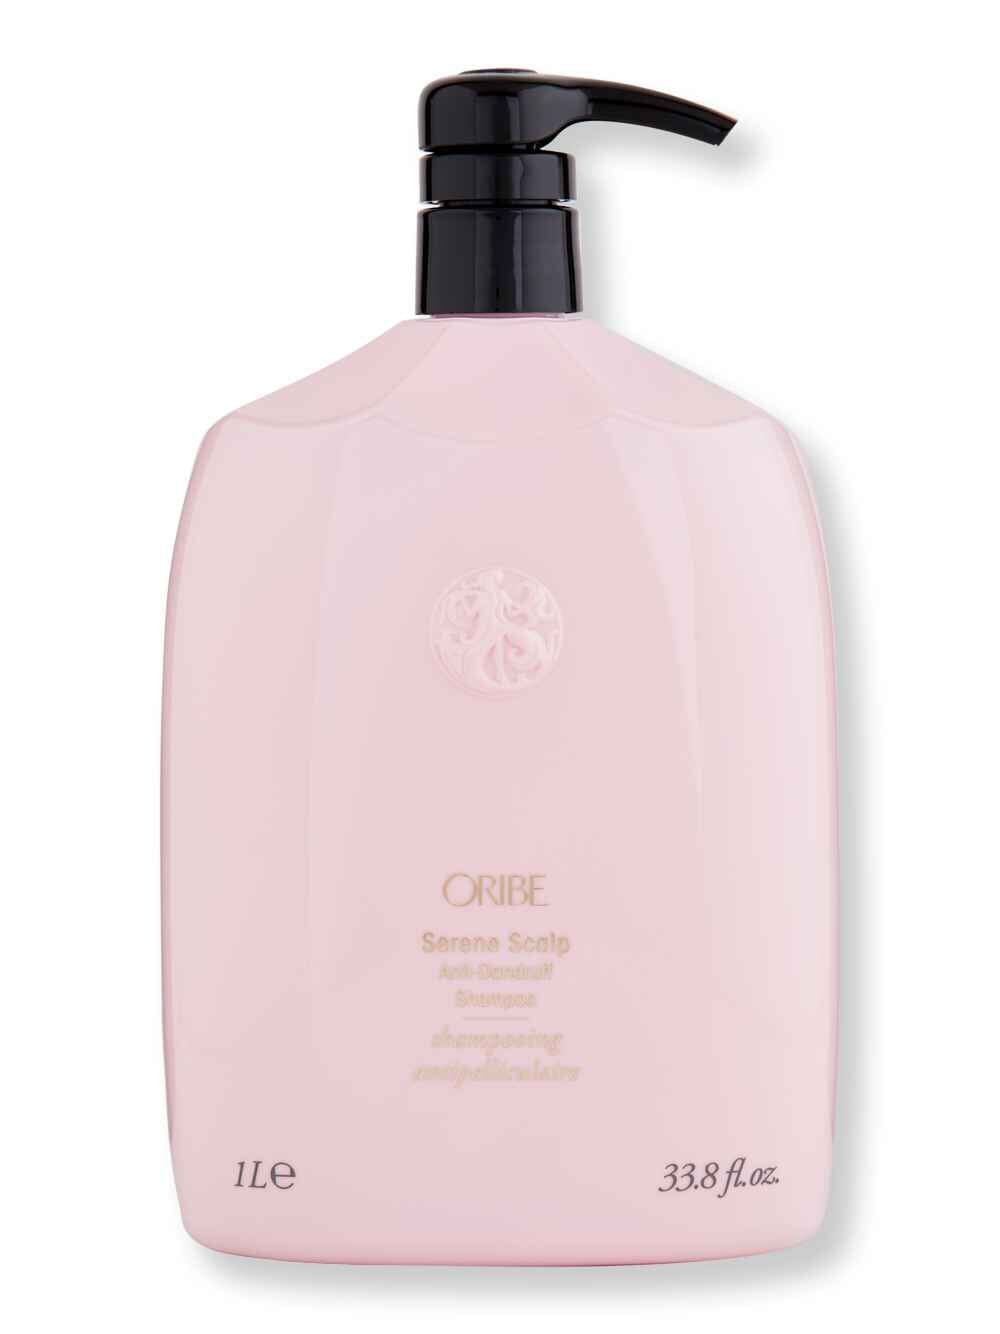 Oribe Oribe Serene Scalp Anti-Dandruff Shampoo 33.8 oz1 L Shampoos 